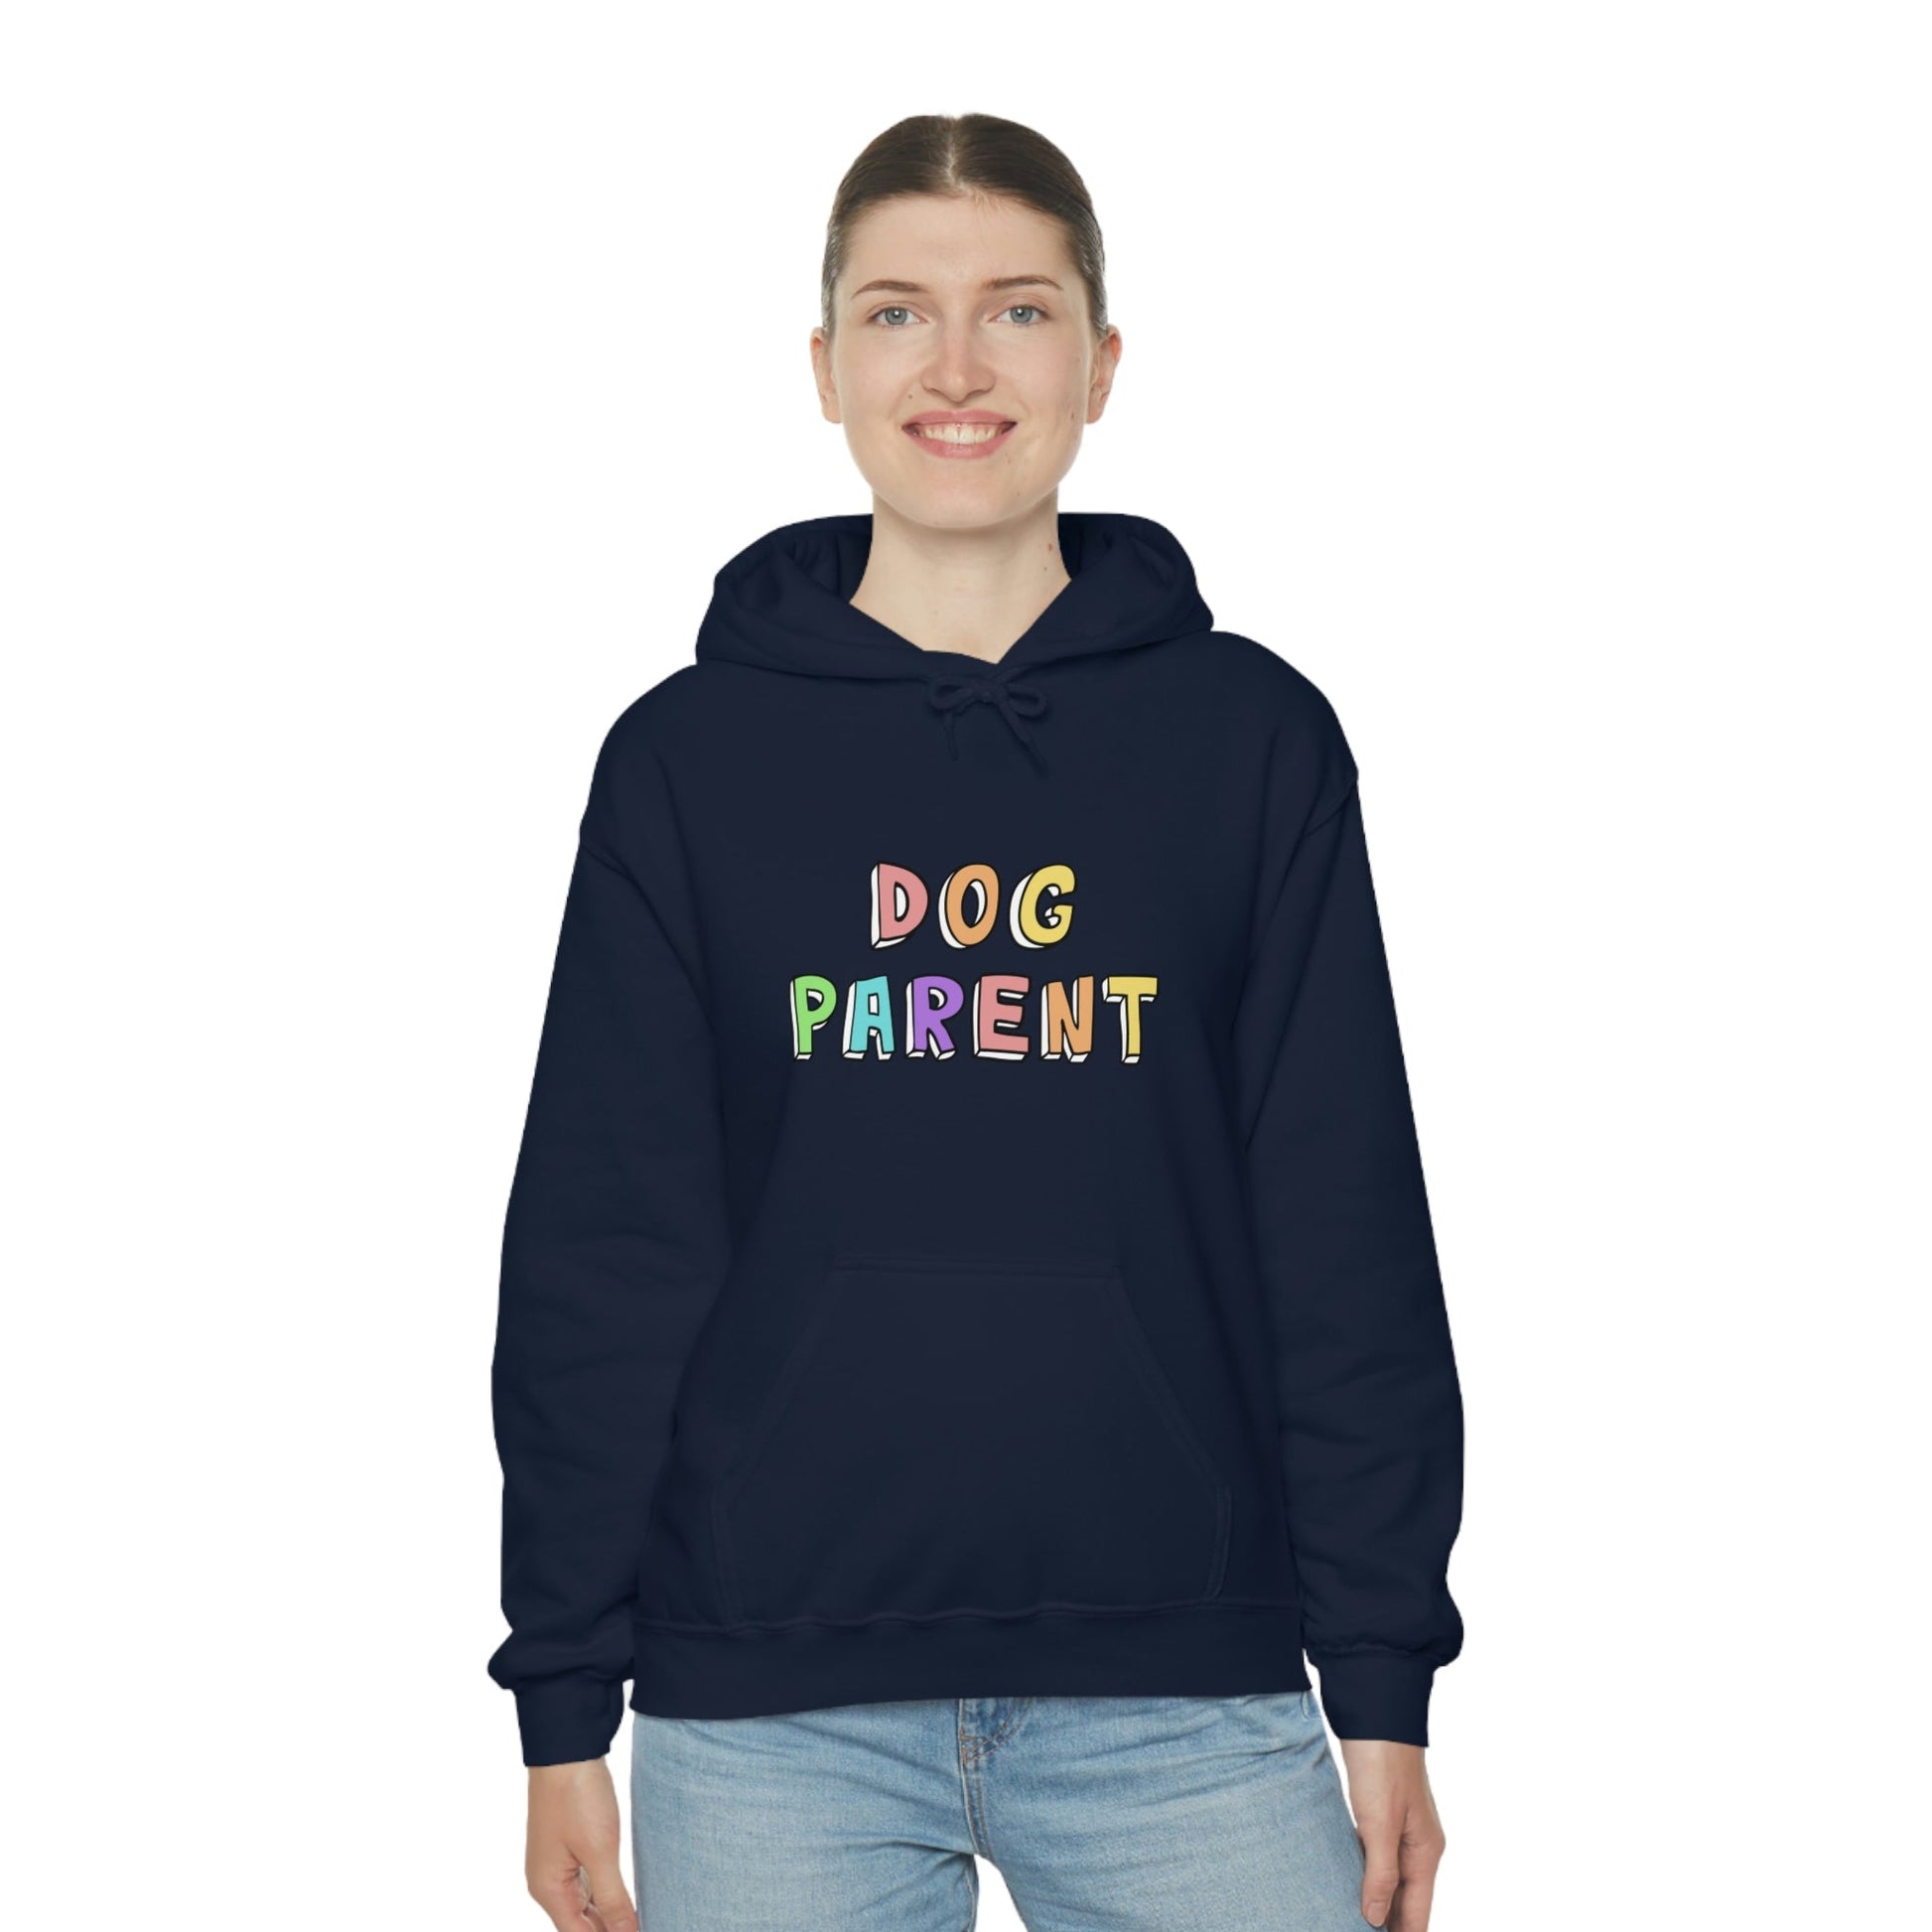 Dog Parent | Hooded Sweatshirt - Detezi Designs-23416535212064833650